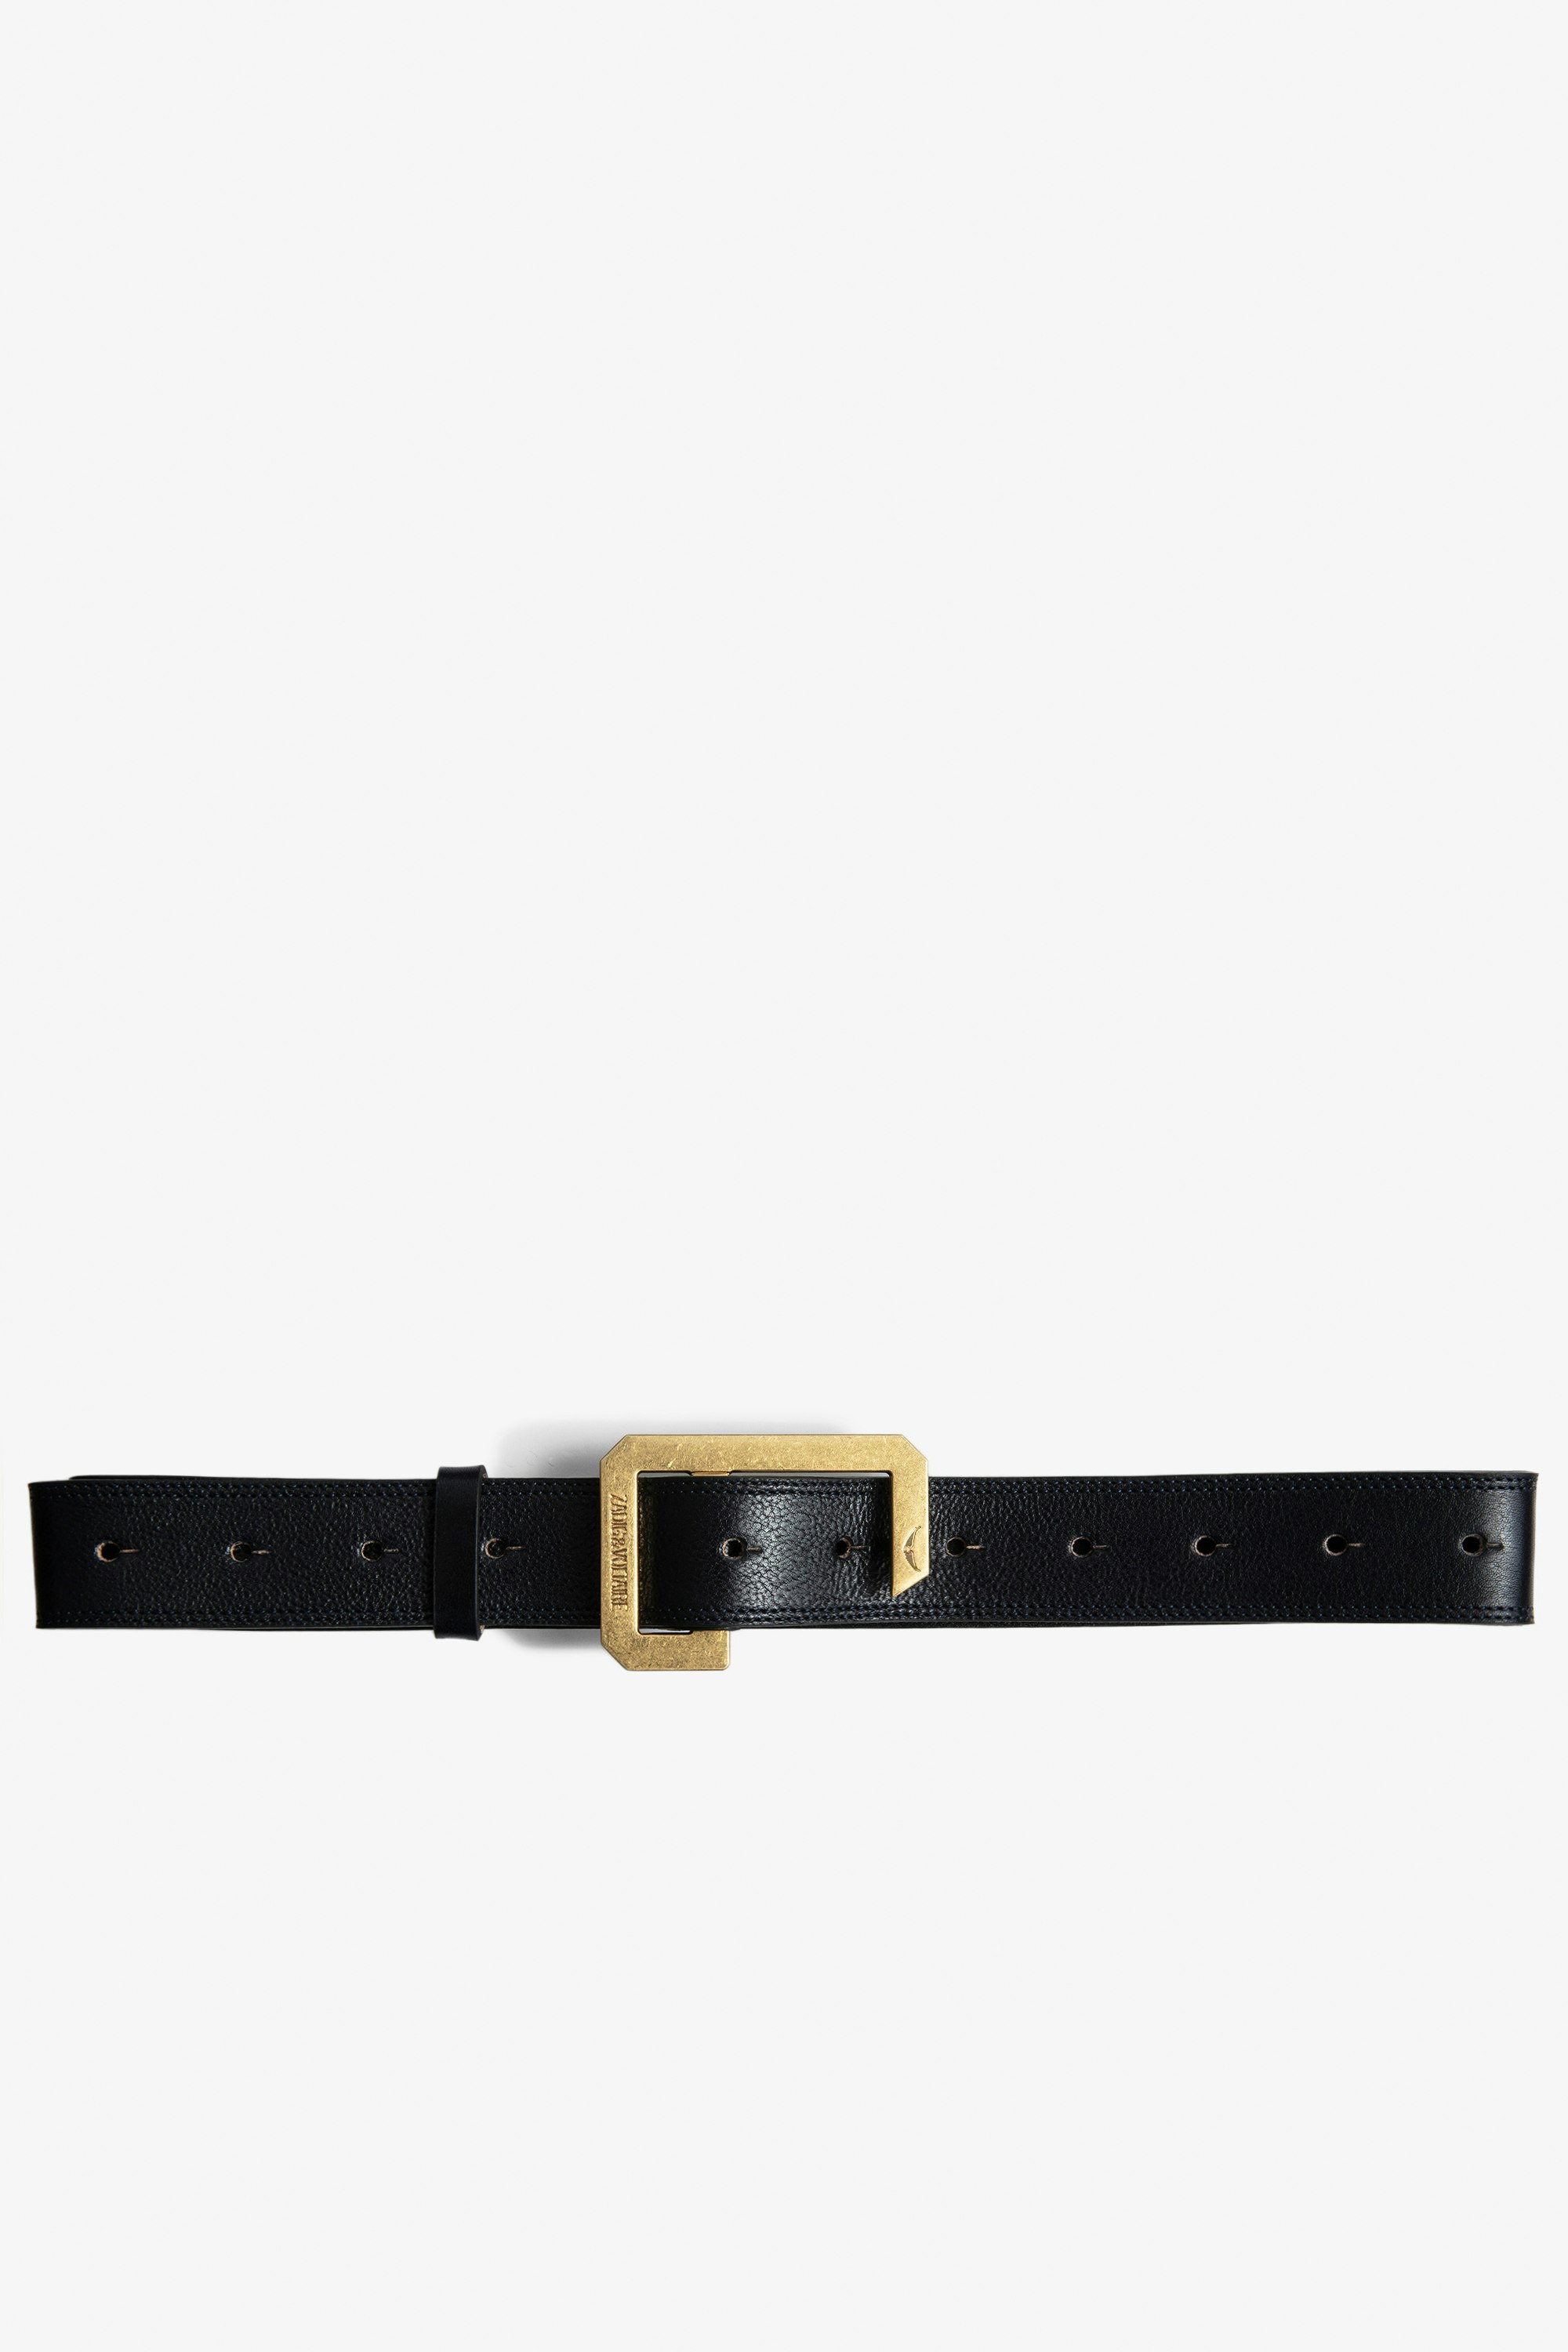 La Cecilia 35 mm Belt - Women's adjustable leather belt with C-shaped buckle